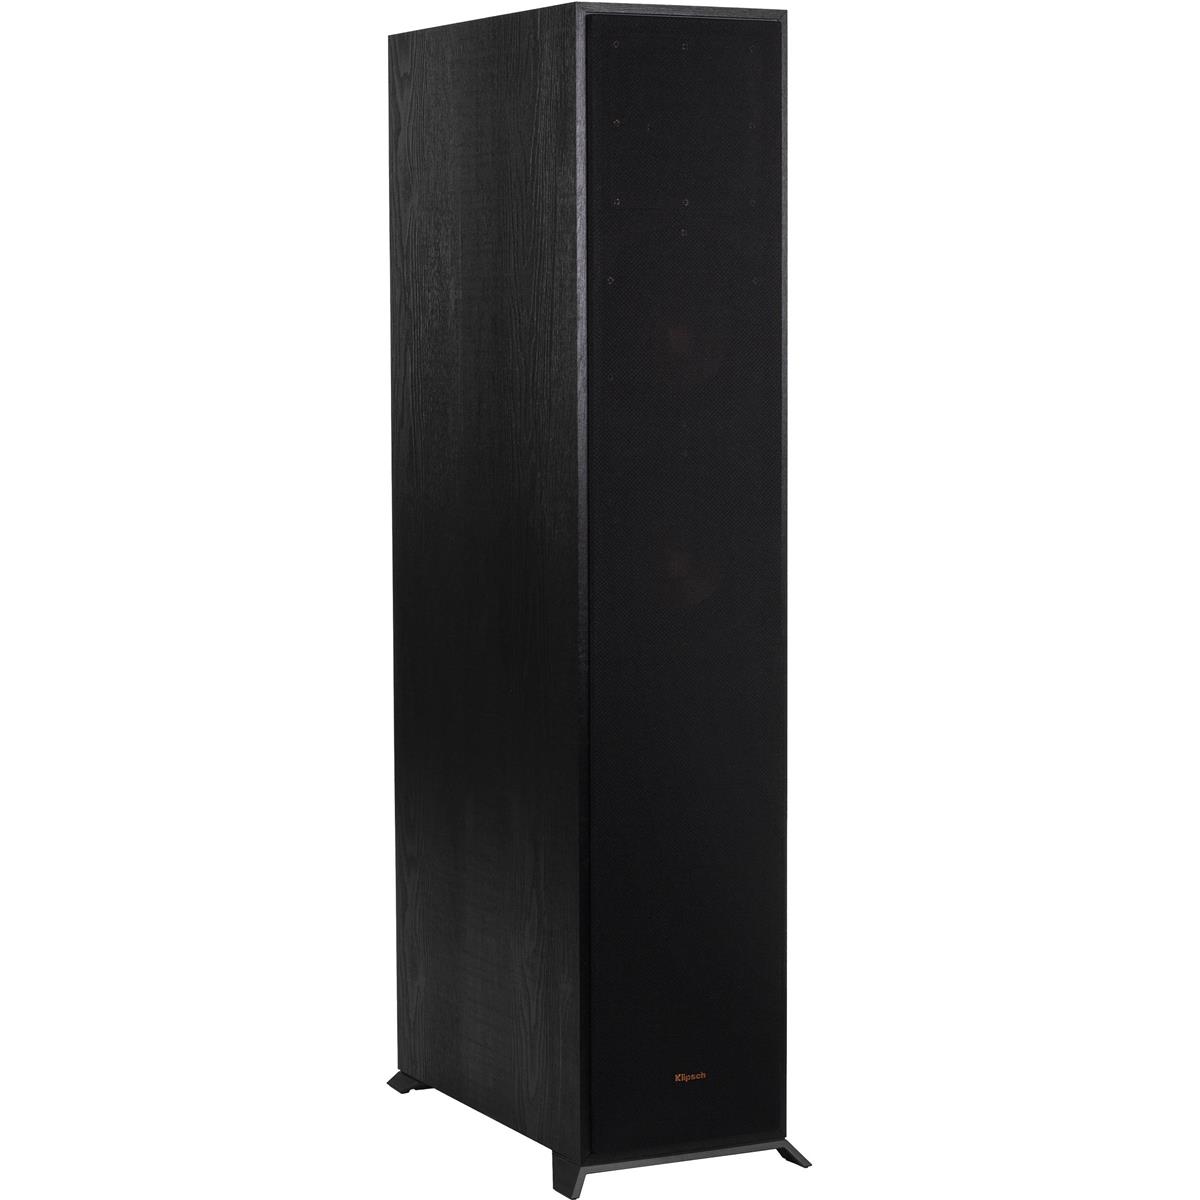 Klipsch Reference R-625FA Floorstanding Speaker, Black Textured Wood Grain Vinyl -  1065841